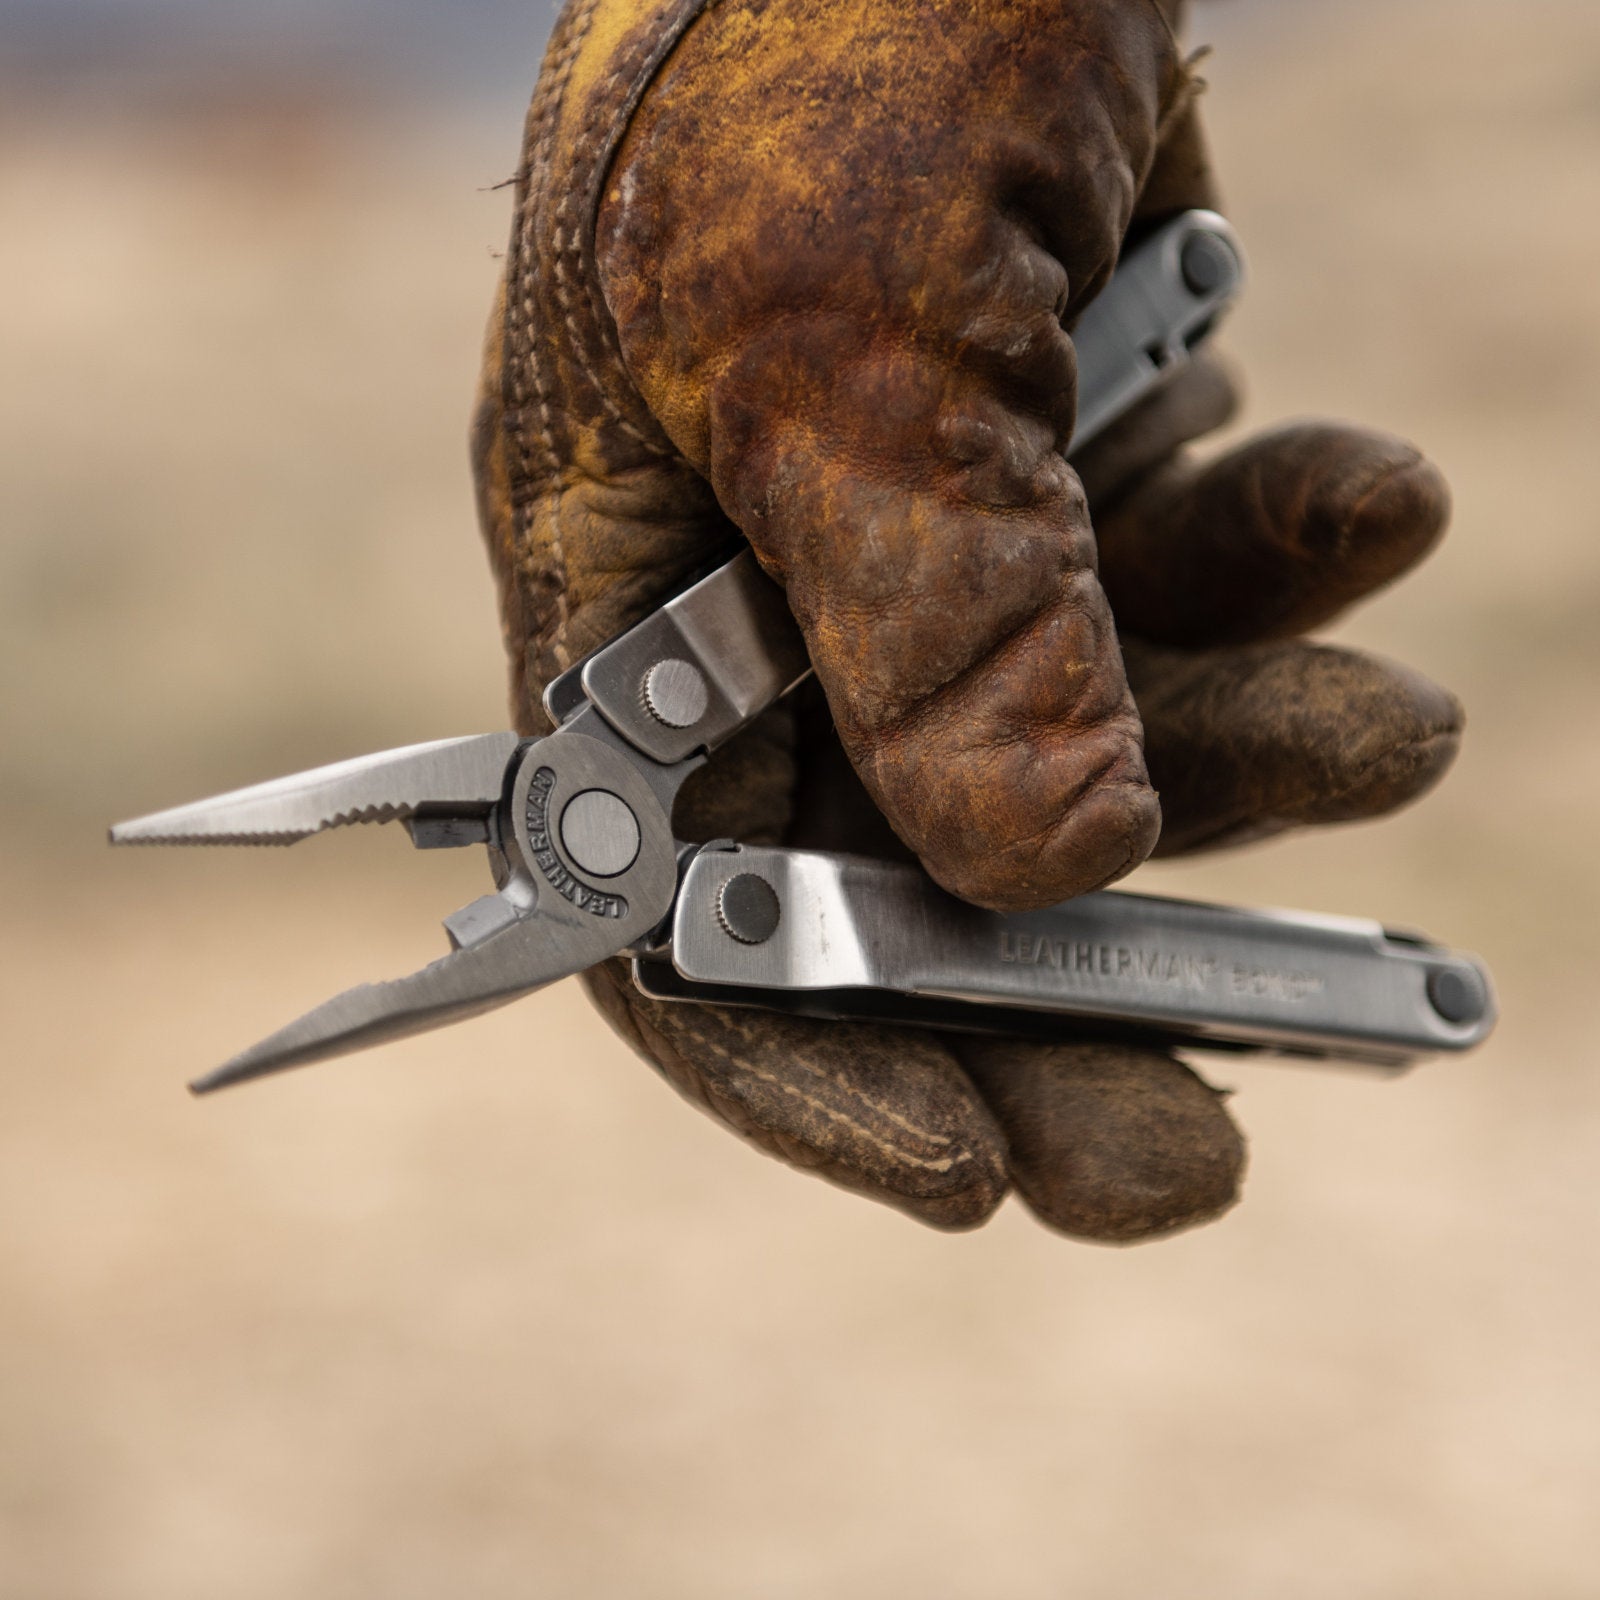 Leatherman Tools at Swiss Knife Shop